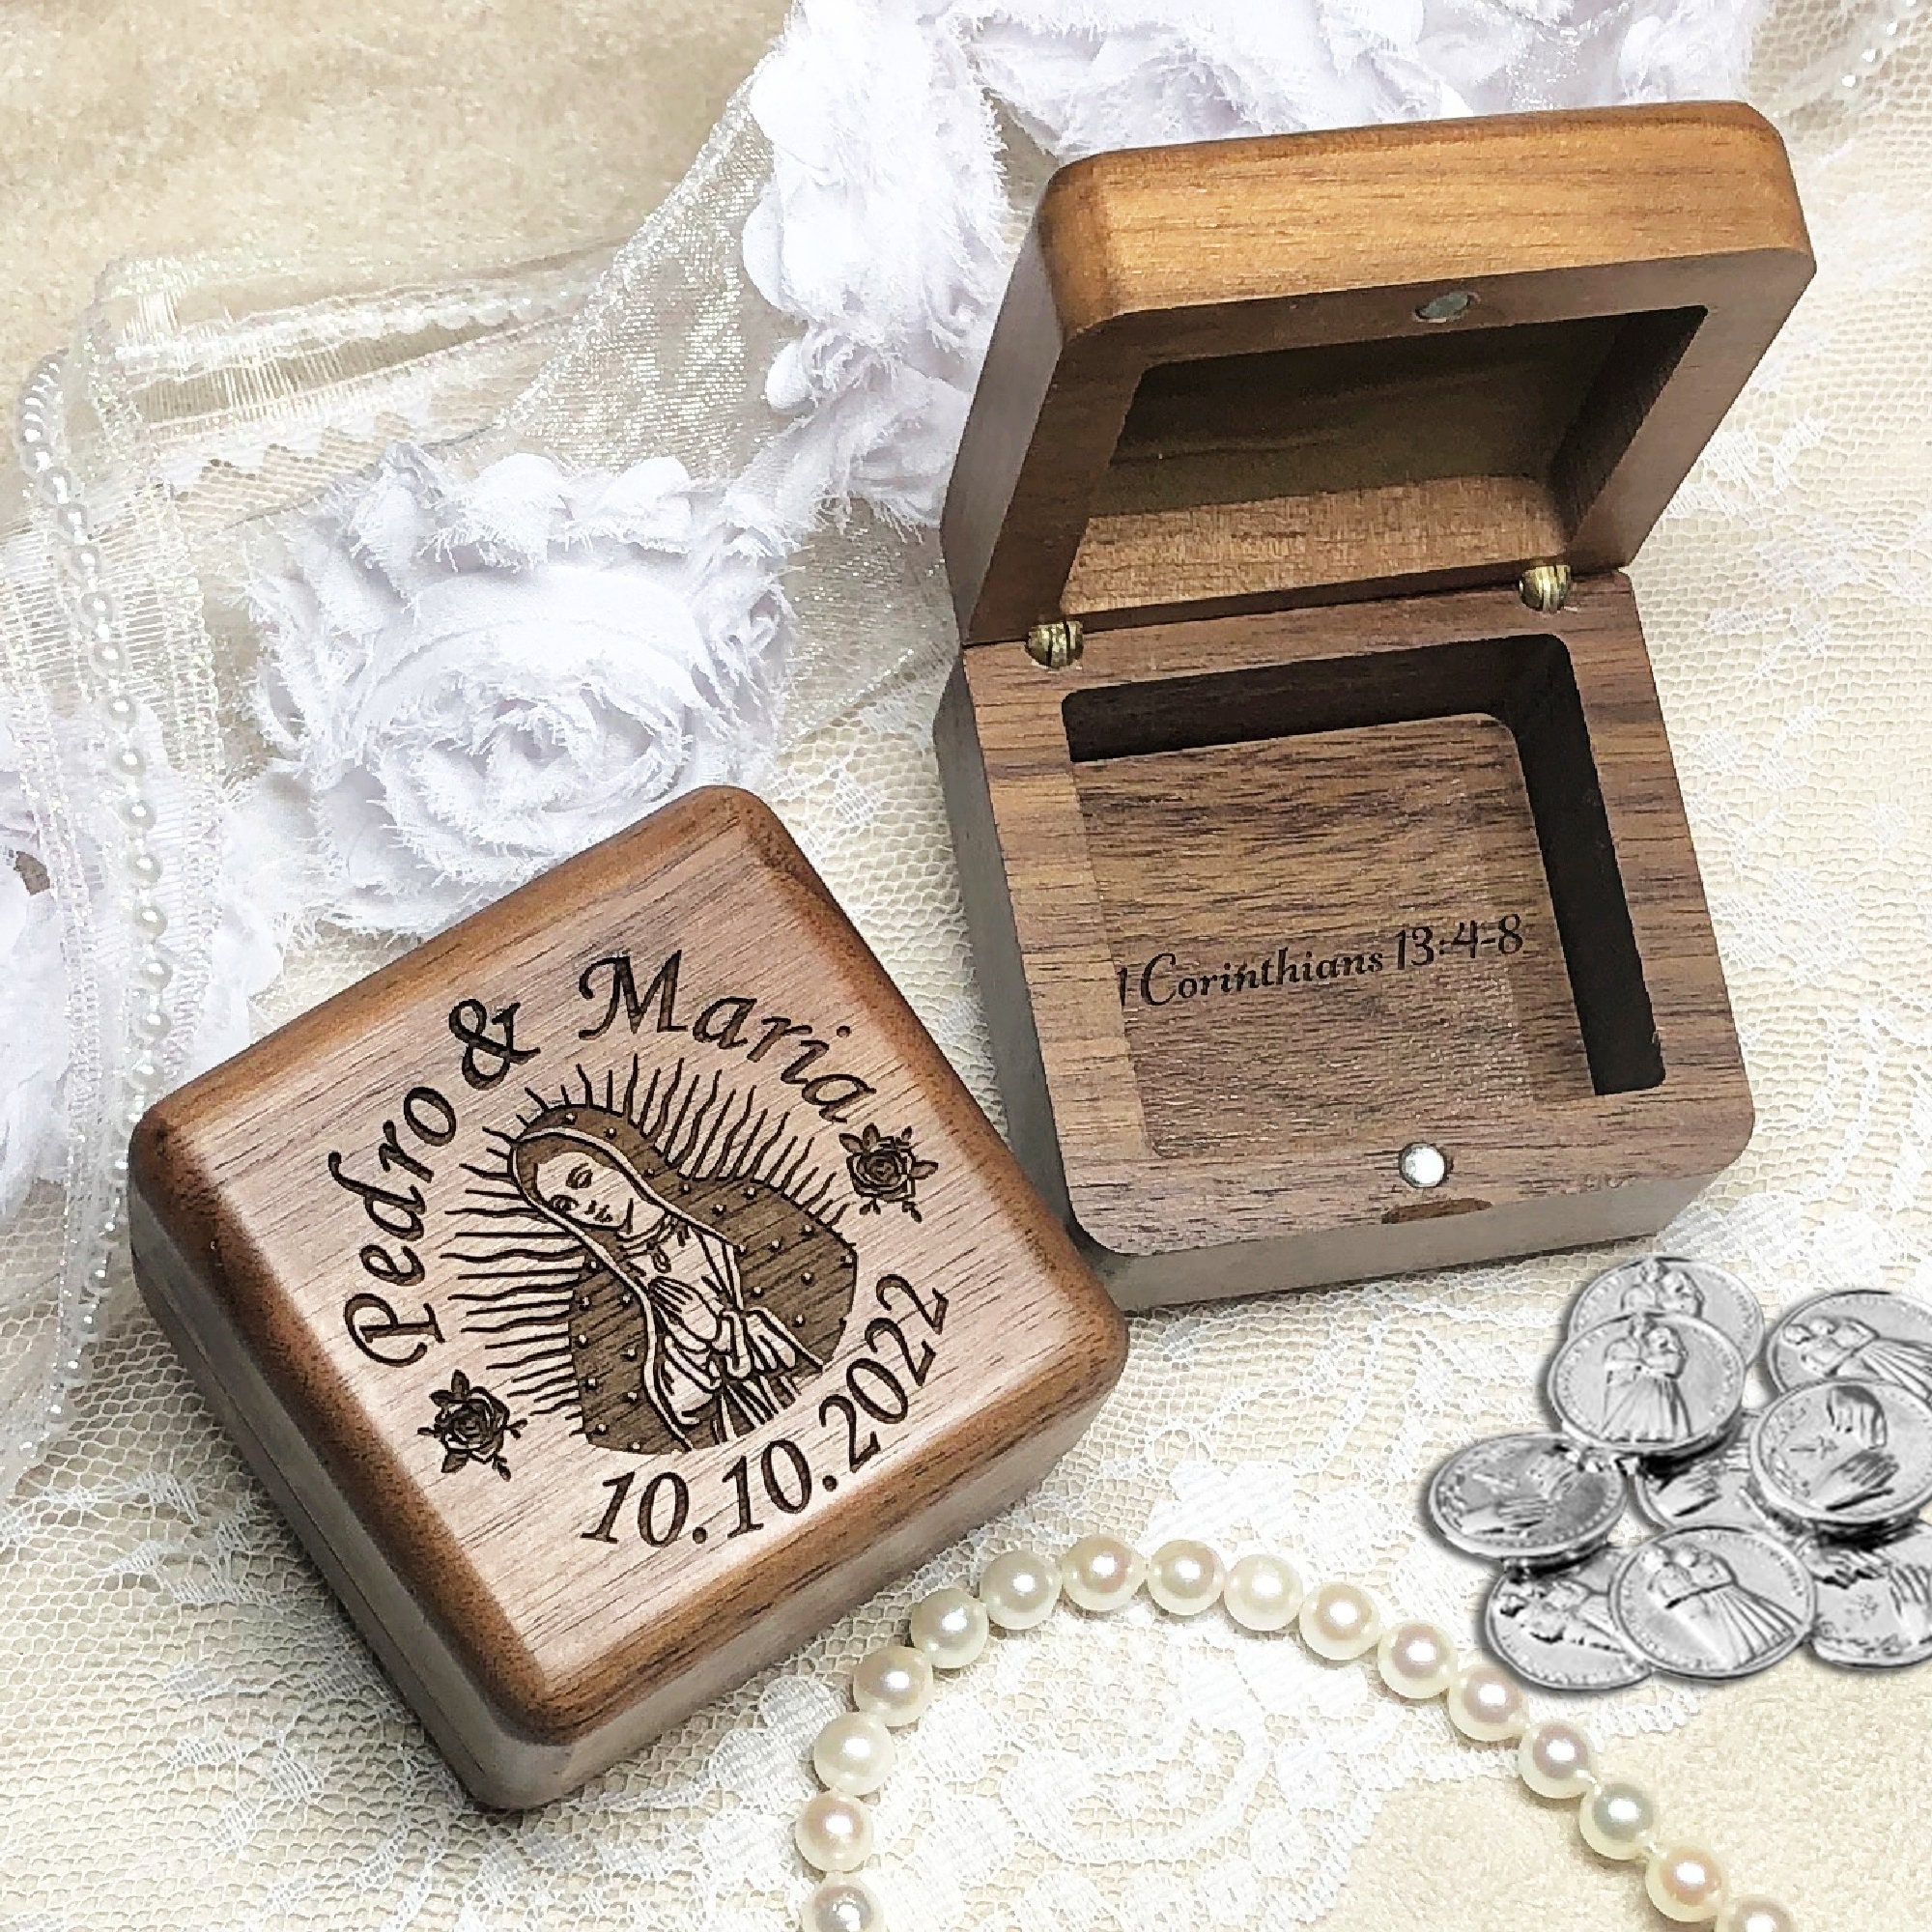 Premium Arras de Boda catholic wedding coins with La Virgen on Wooden Box  ultra unity coins or arras de matrimonio golden with our lady of guadalupe